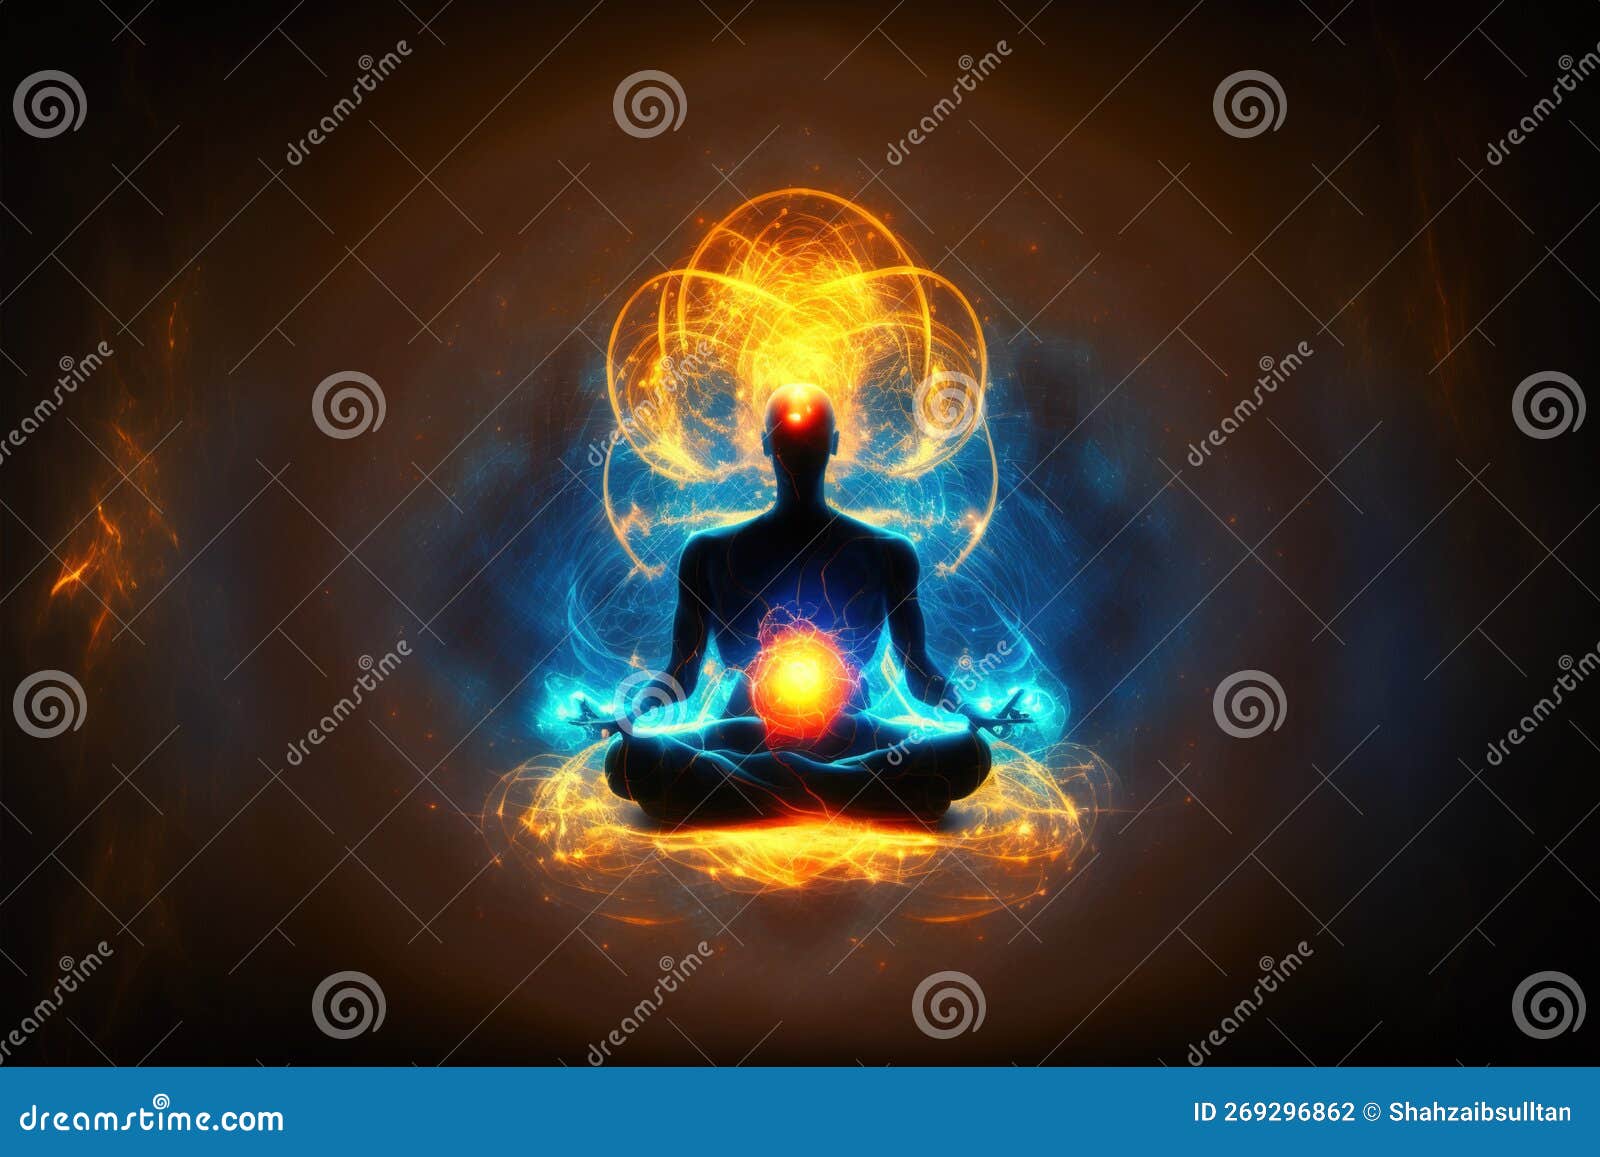 universe cosmos. meditation background yoga lotus pose, chakras, prana,